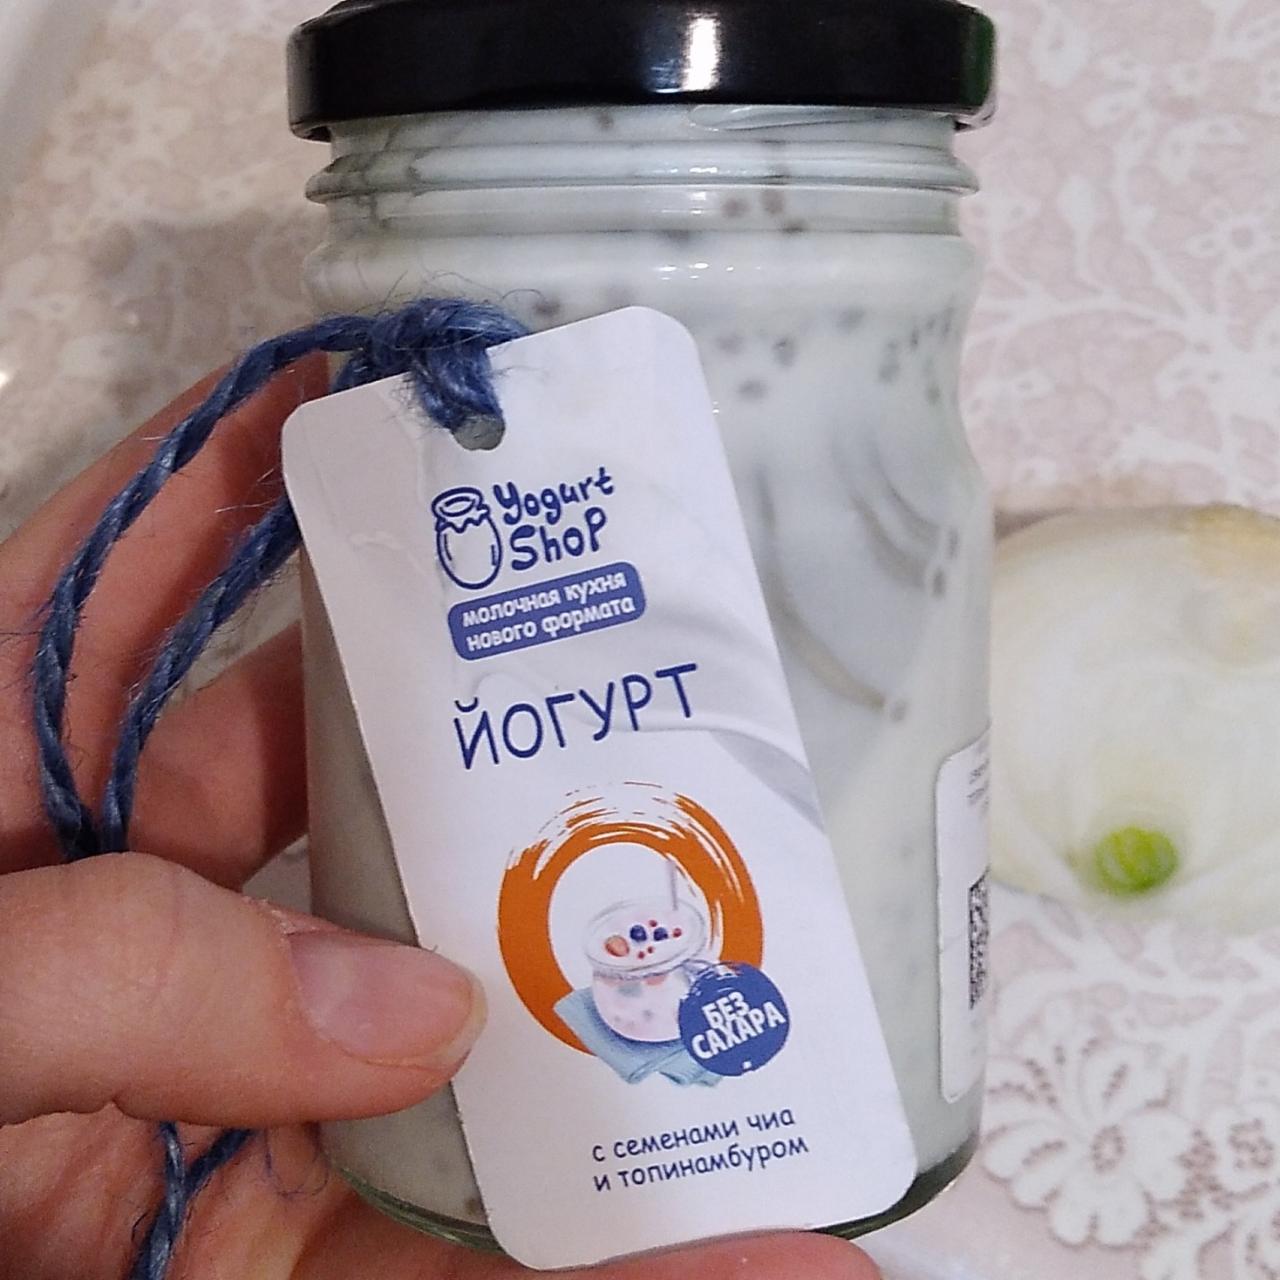 Фото - йогурт с семенами чиа и топинамбуром Yogurt Shop